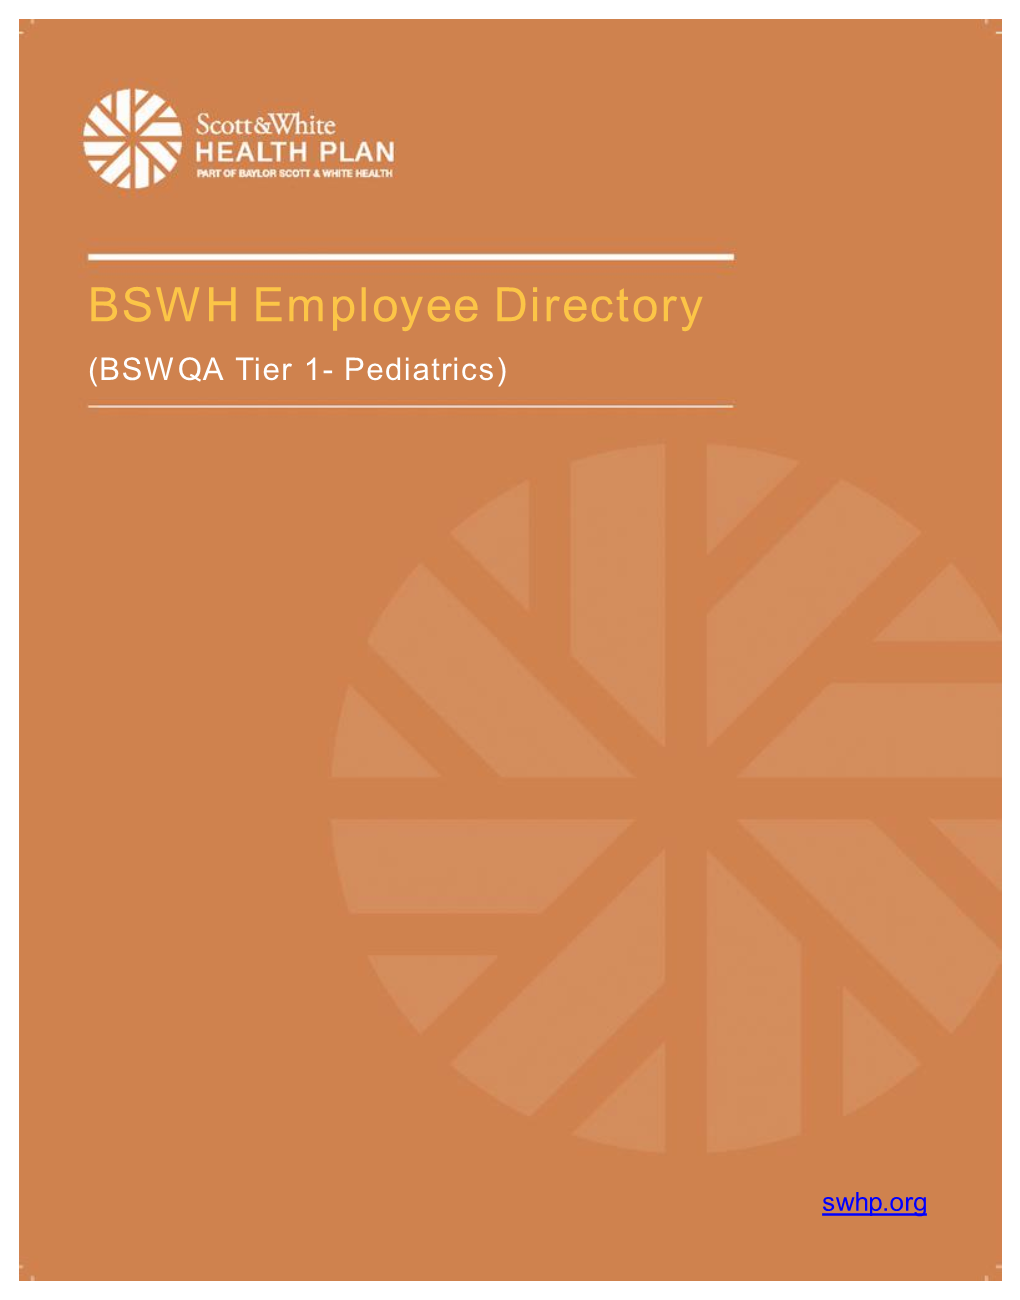 BSWH Employee Directory (BSWQA Tier 1- Pediatrics)